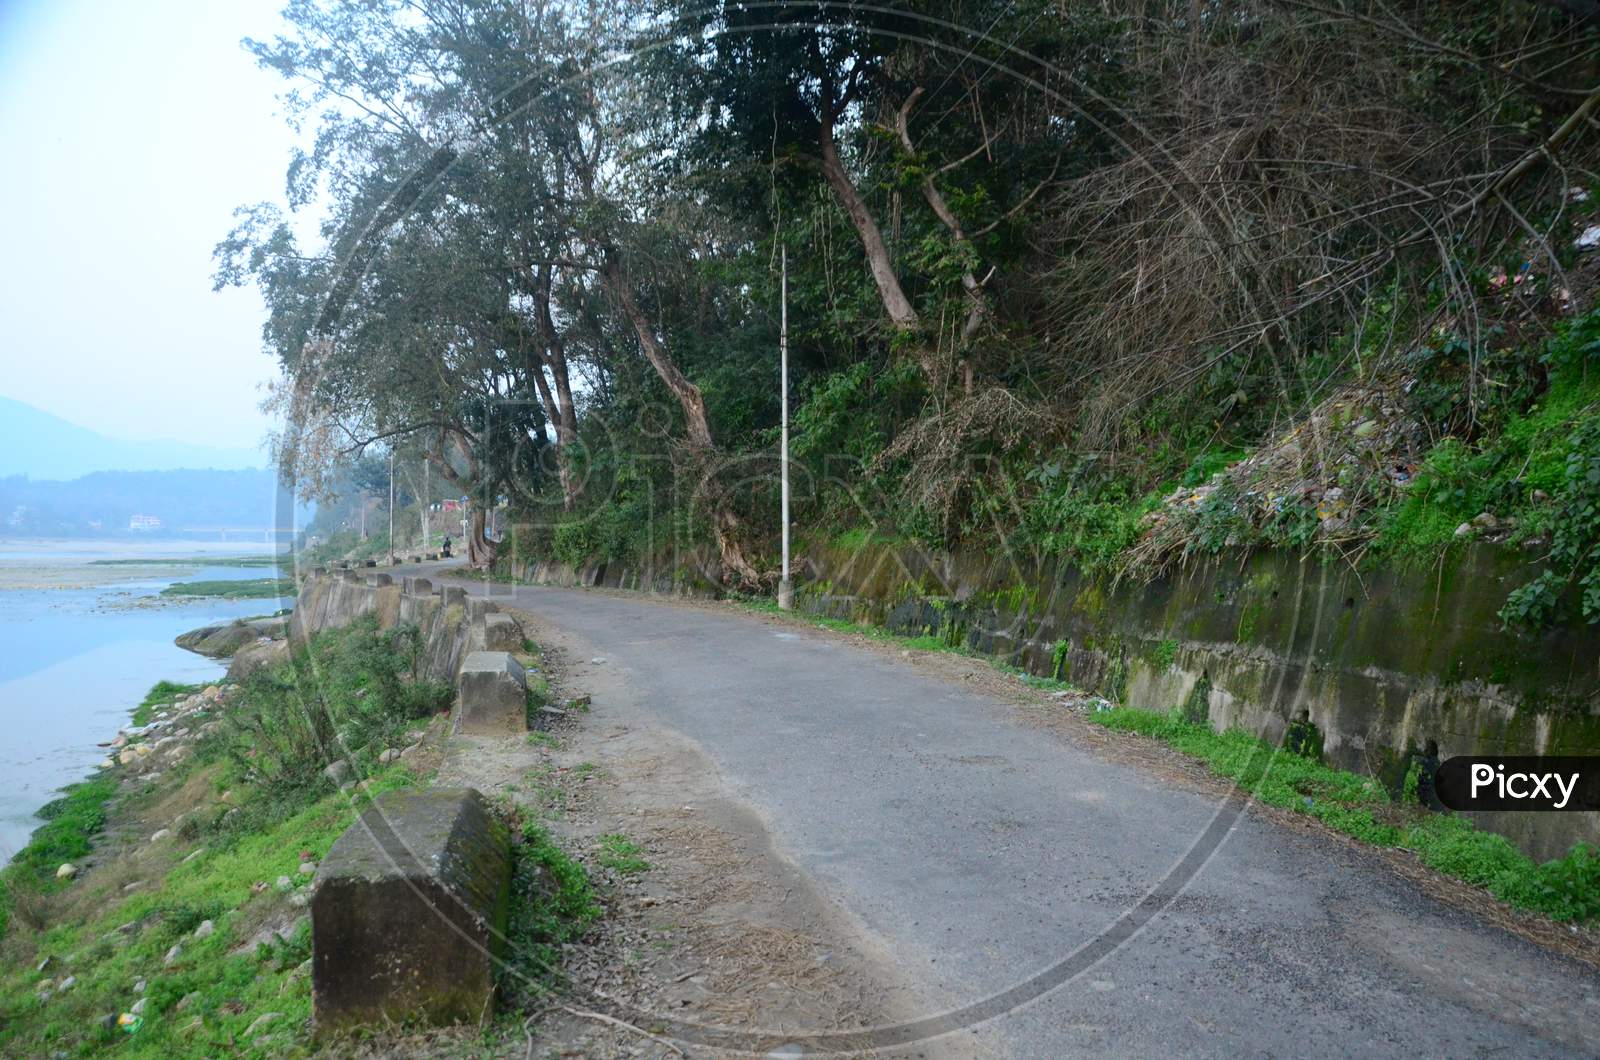 Beautiful road side view of Himachal Pradas, India